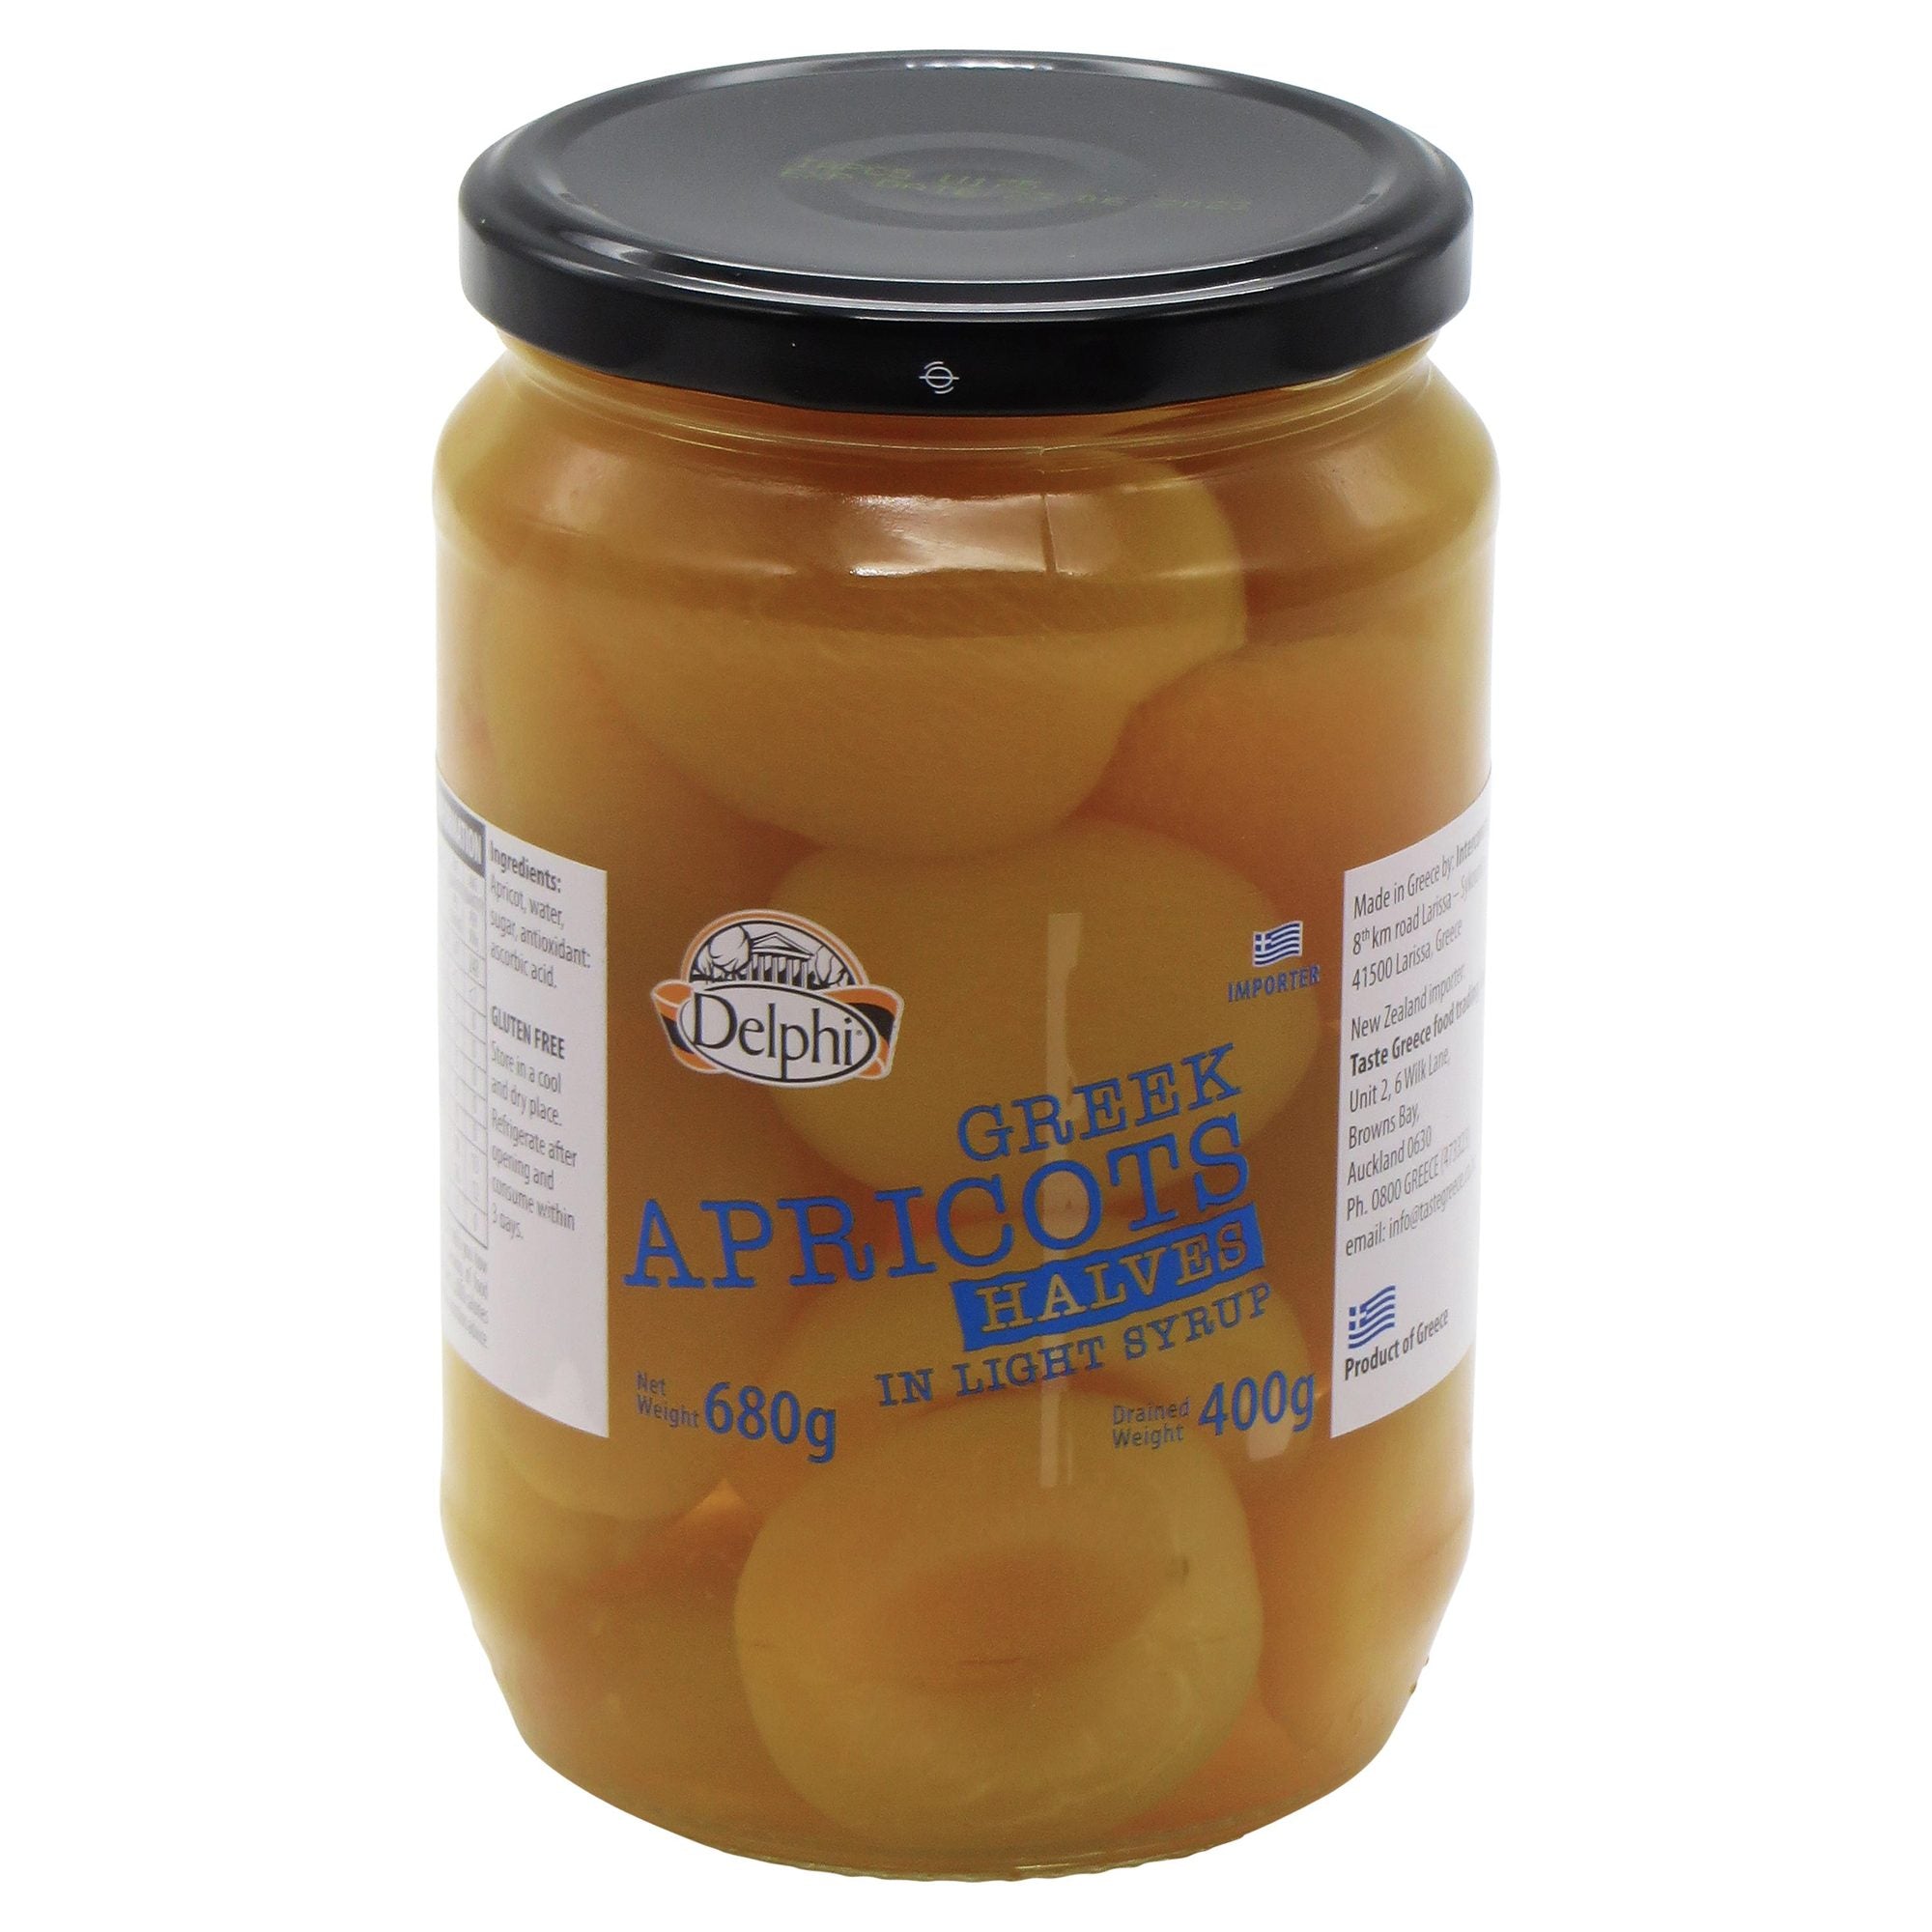 DELPHI Greek Apricot Halves 680g